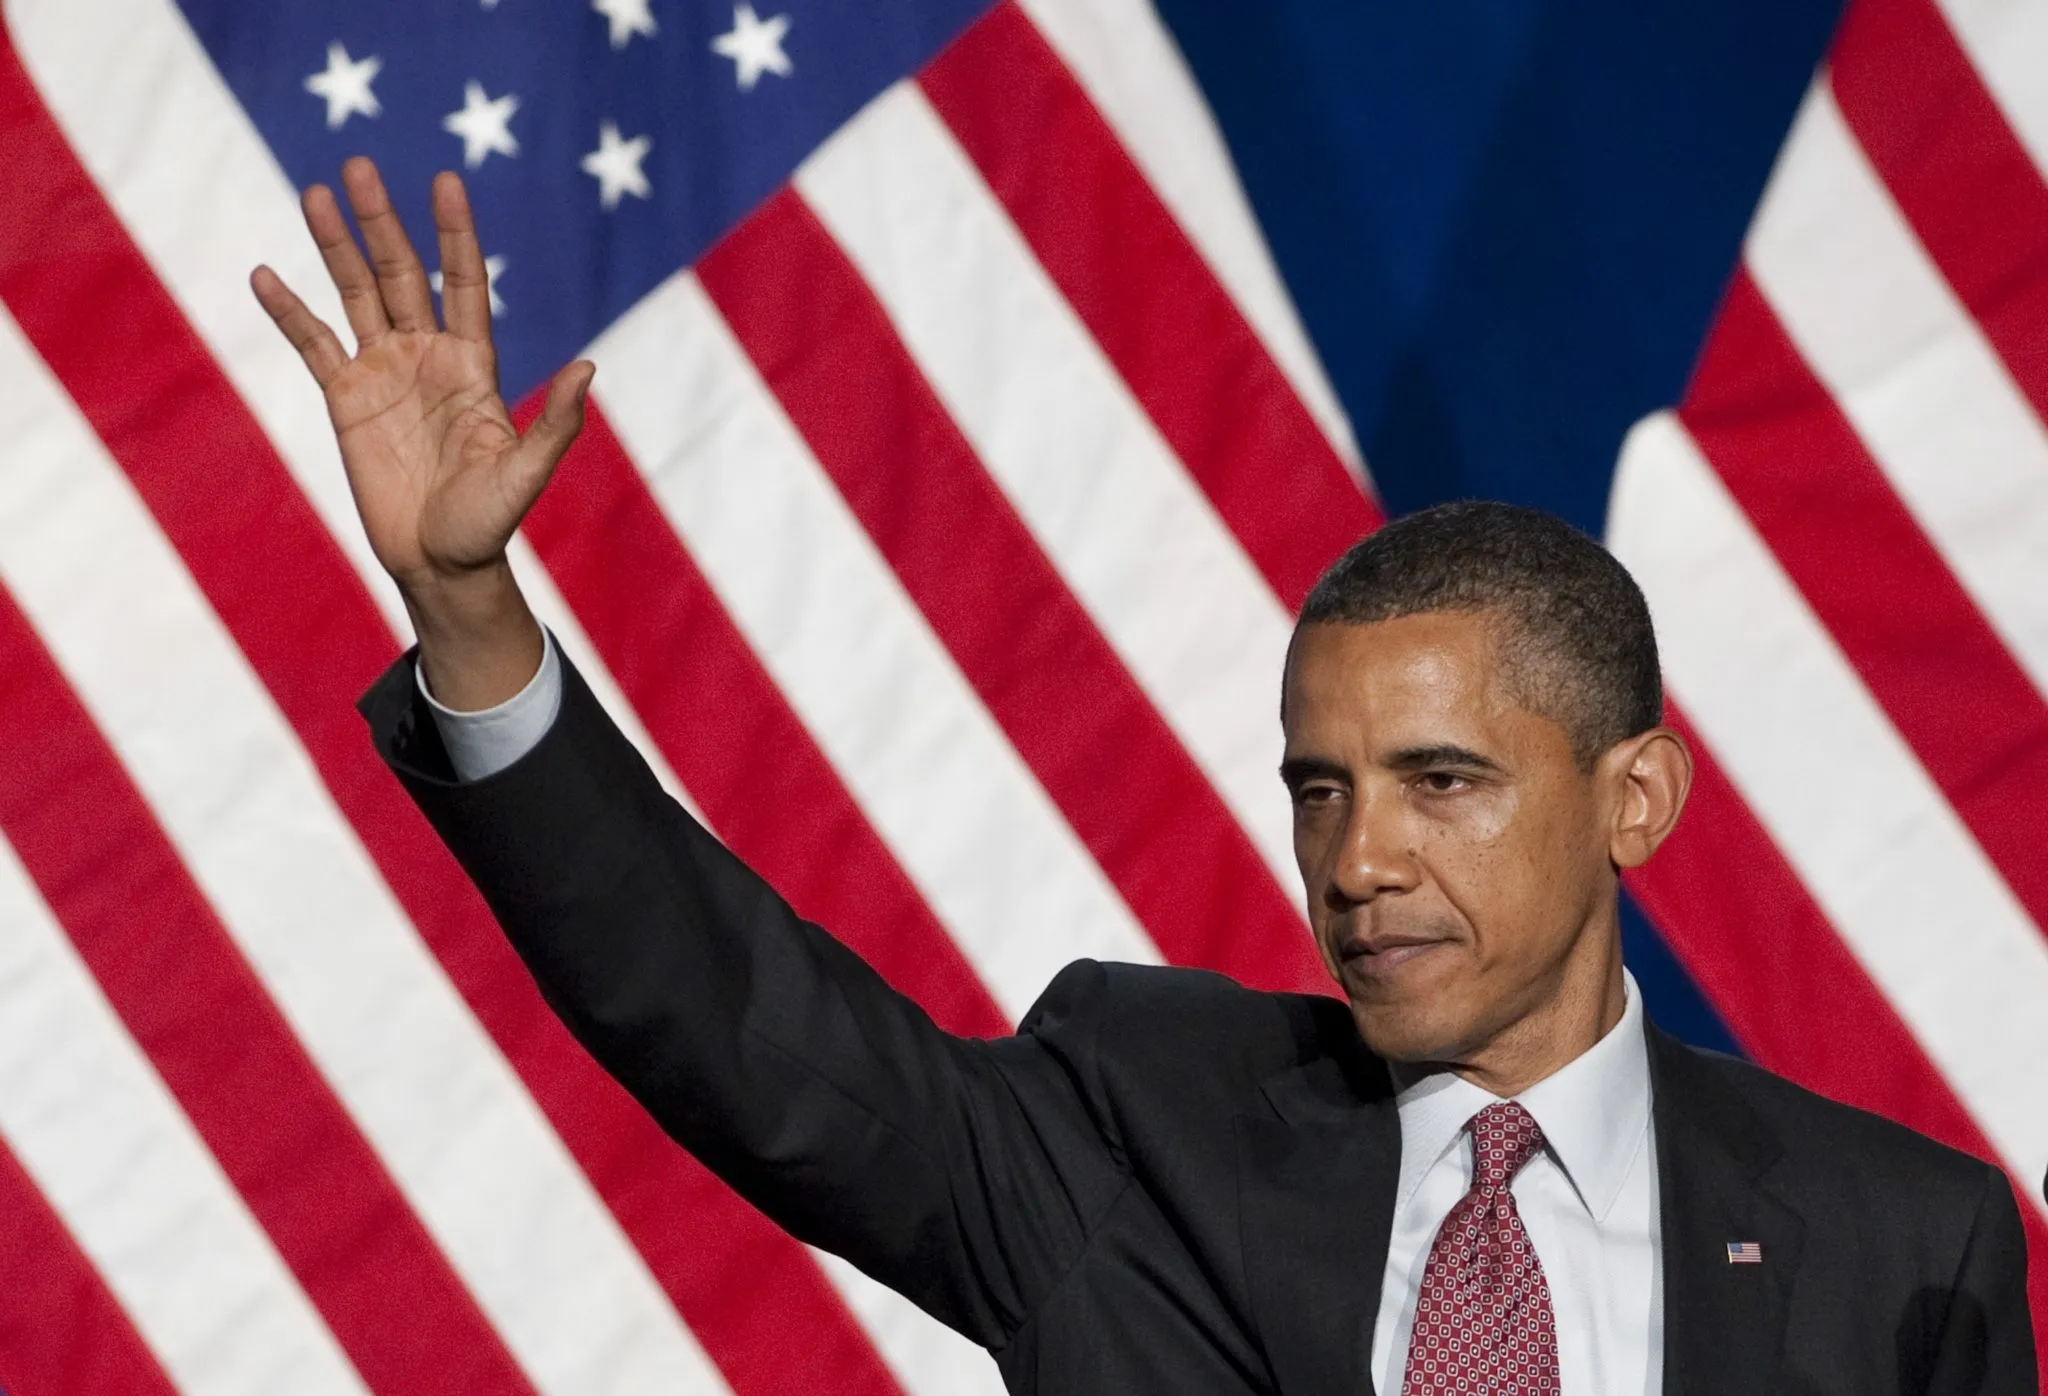 US President Barack Obama waves after speaking at the Democratic National Committee's Lesbian Gay Bisexual Transgender Leadership Gala in New York, June 23, 2011